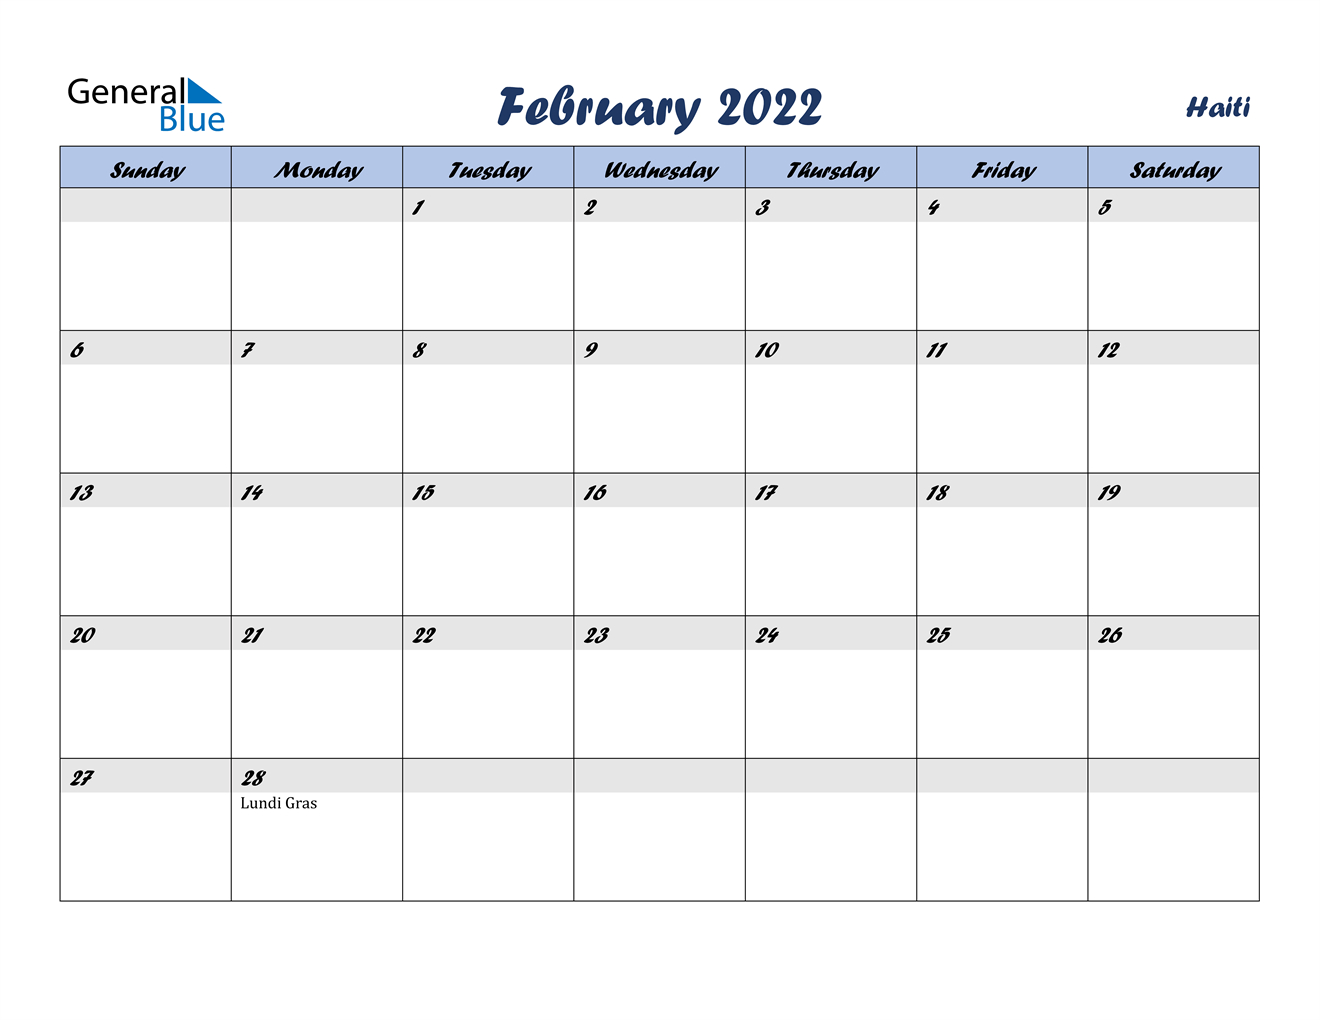 Get Calendar 2022 February With Islamic Dates